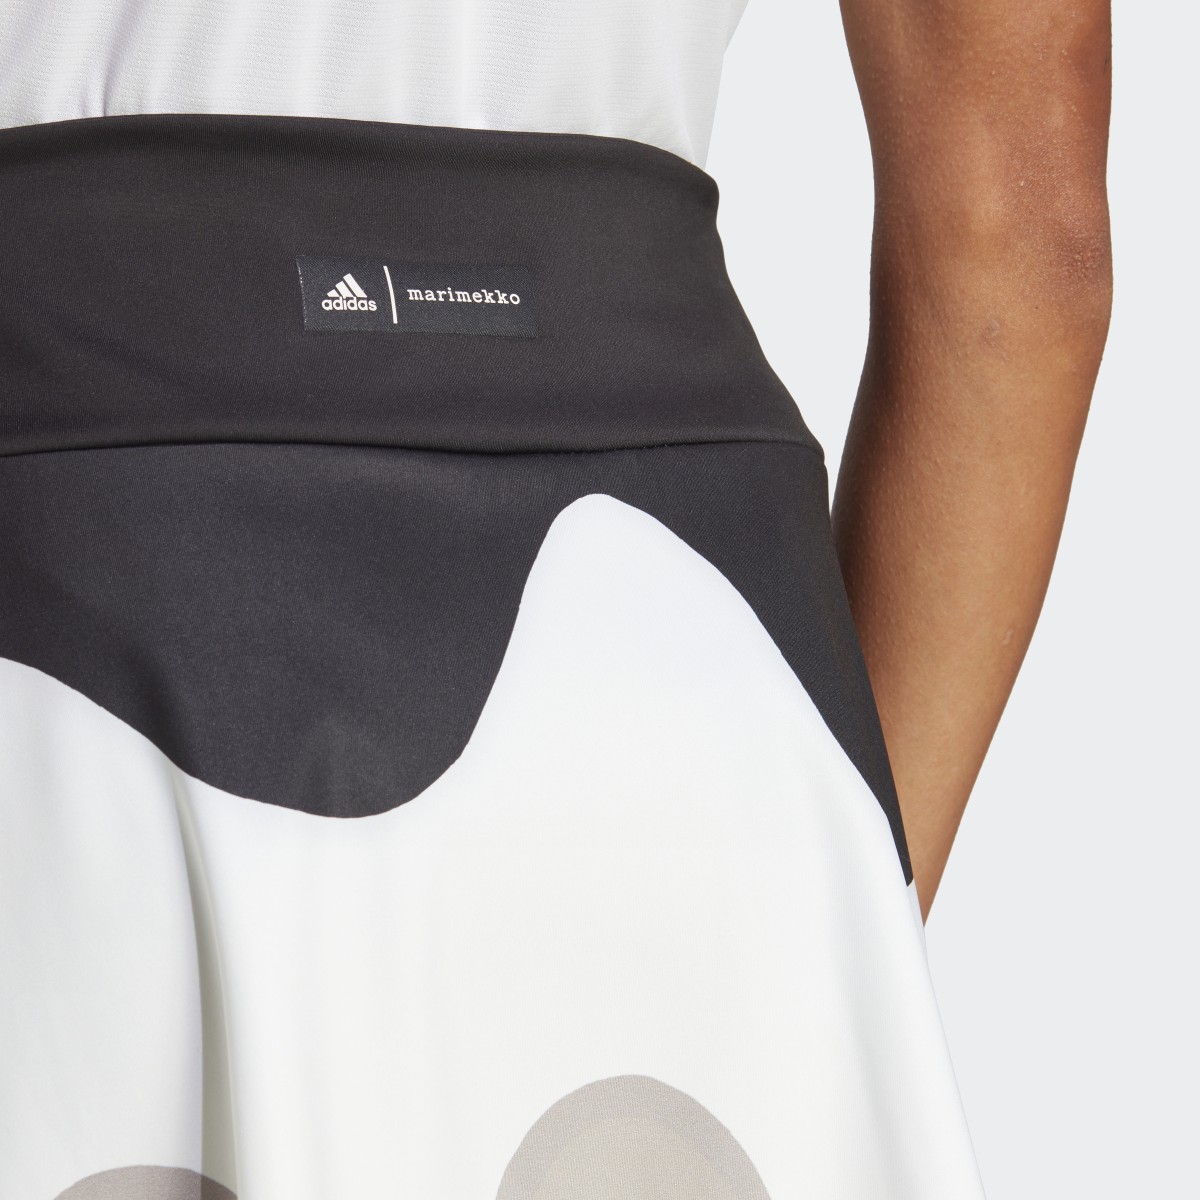 Adidas Marimekko Tennis Skirt. 8